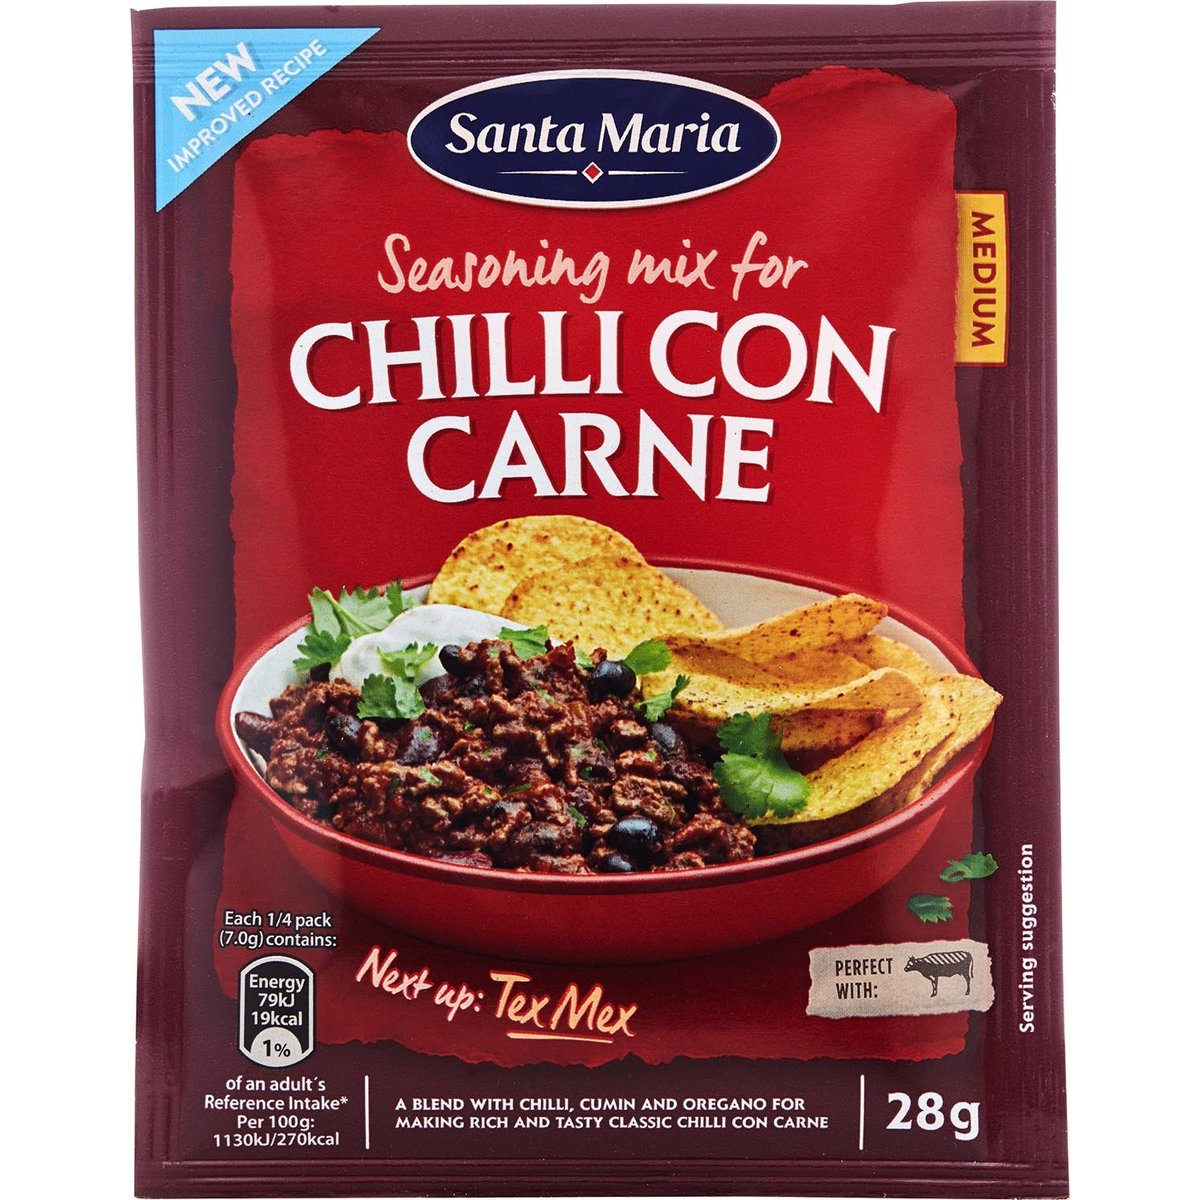 Santa Maria Chili ConCarne seasoning mix